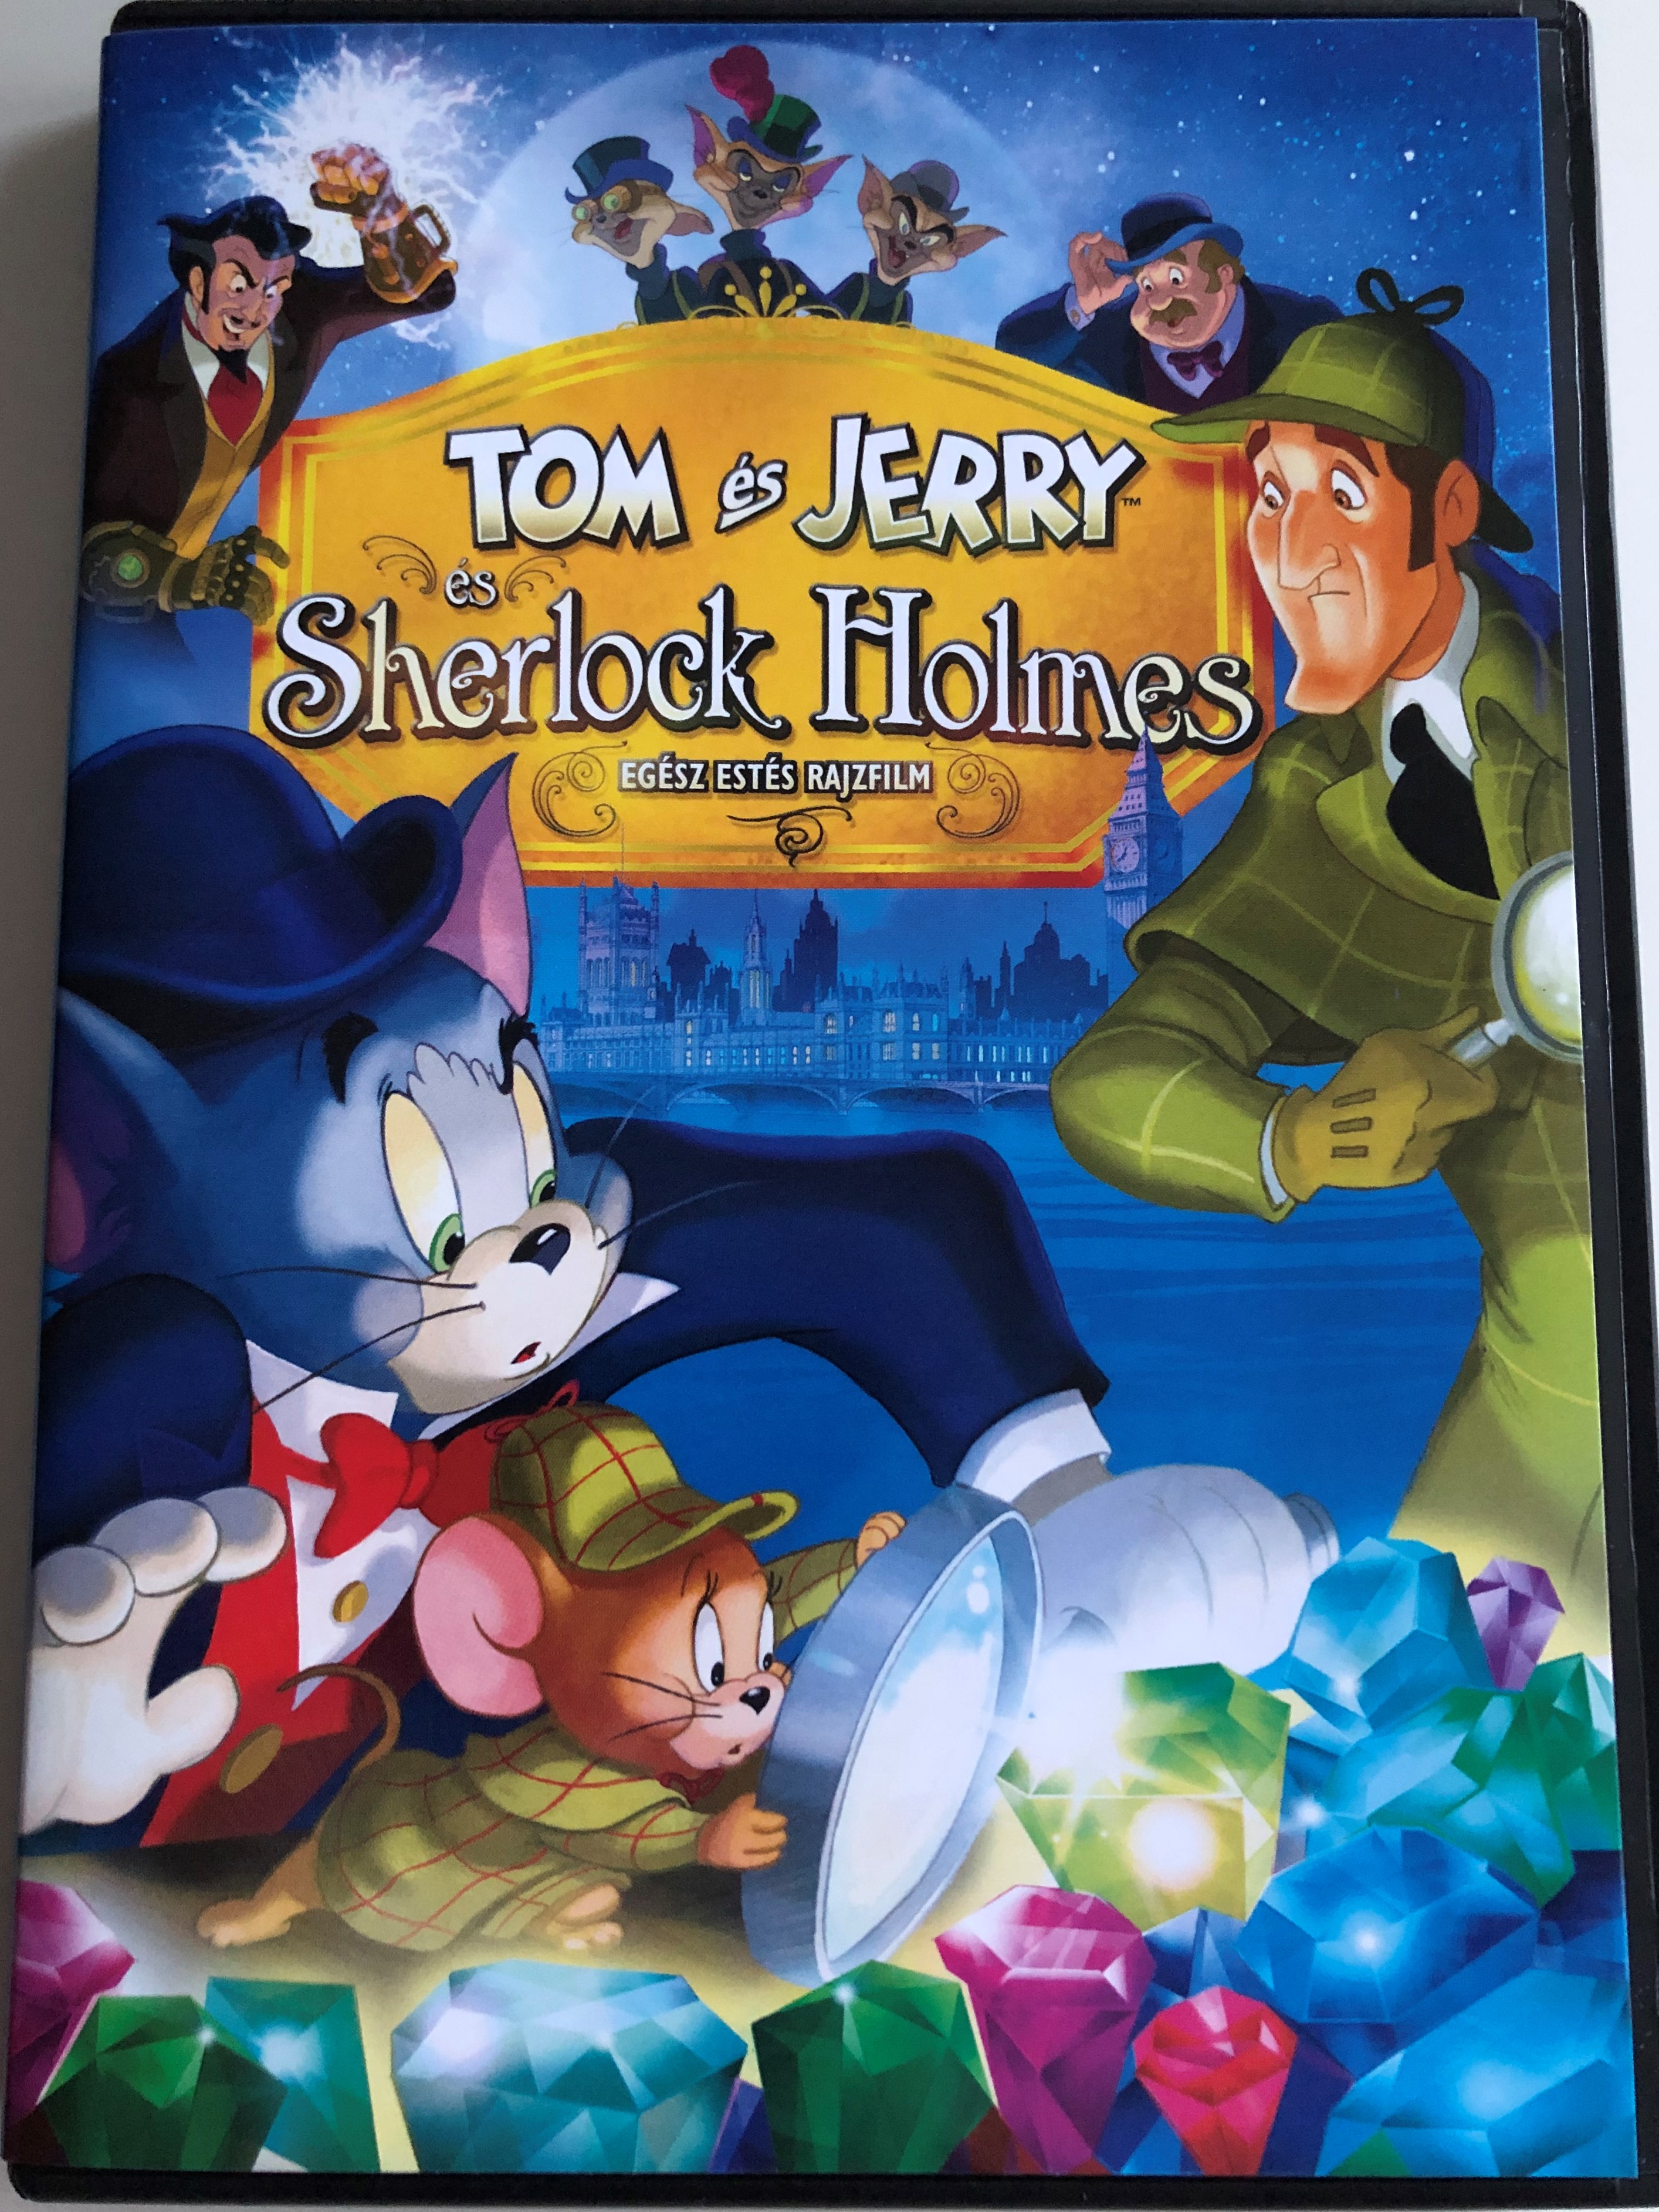 tom-and-jerry-meet-sherlock-holmes-dvd-2010-tom-s-jerry-s-sherlock-holmes-1.jpg